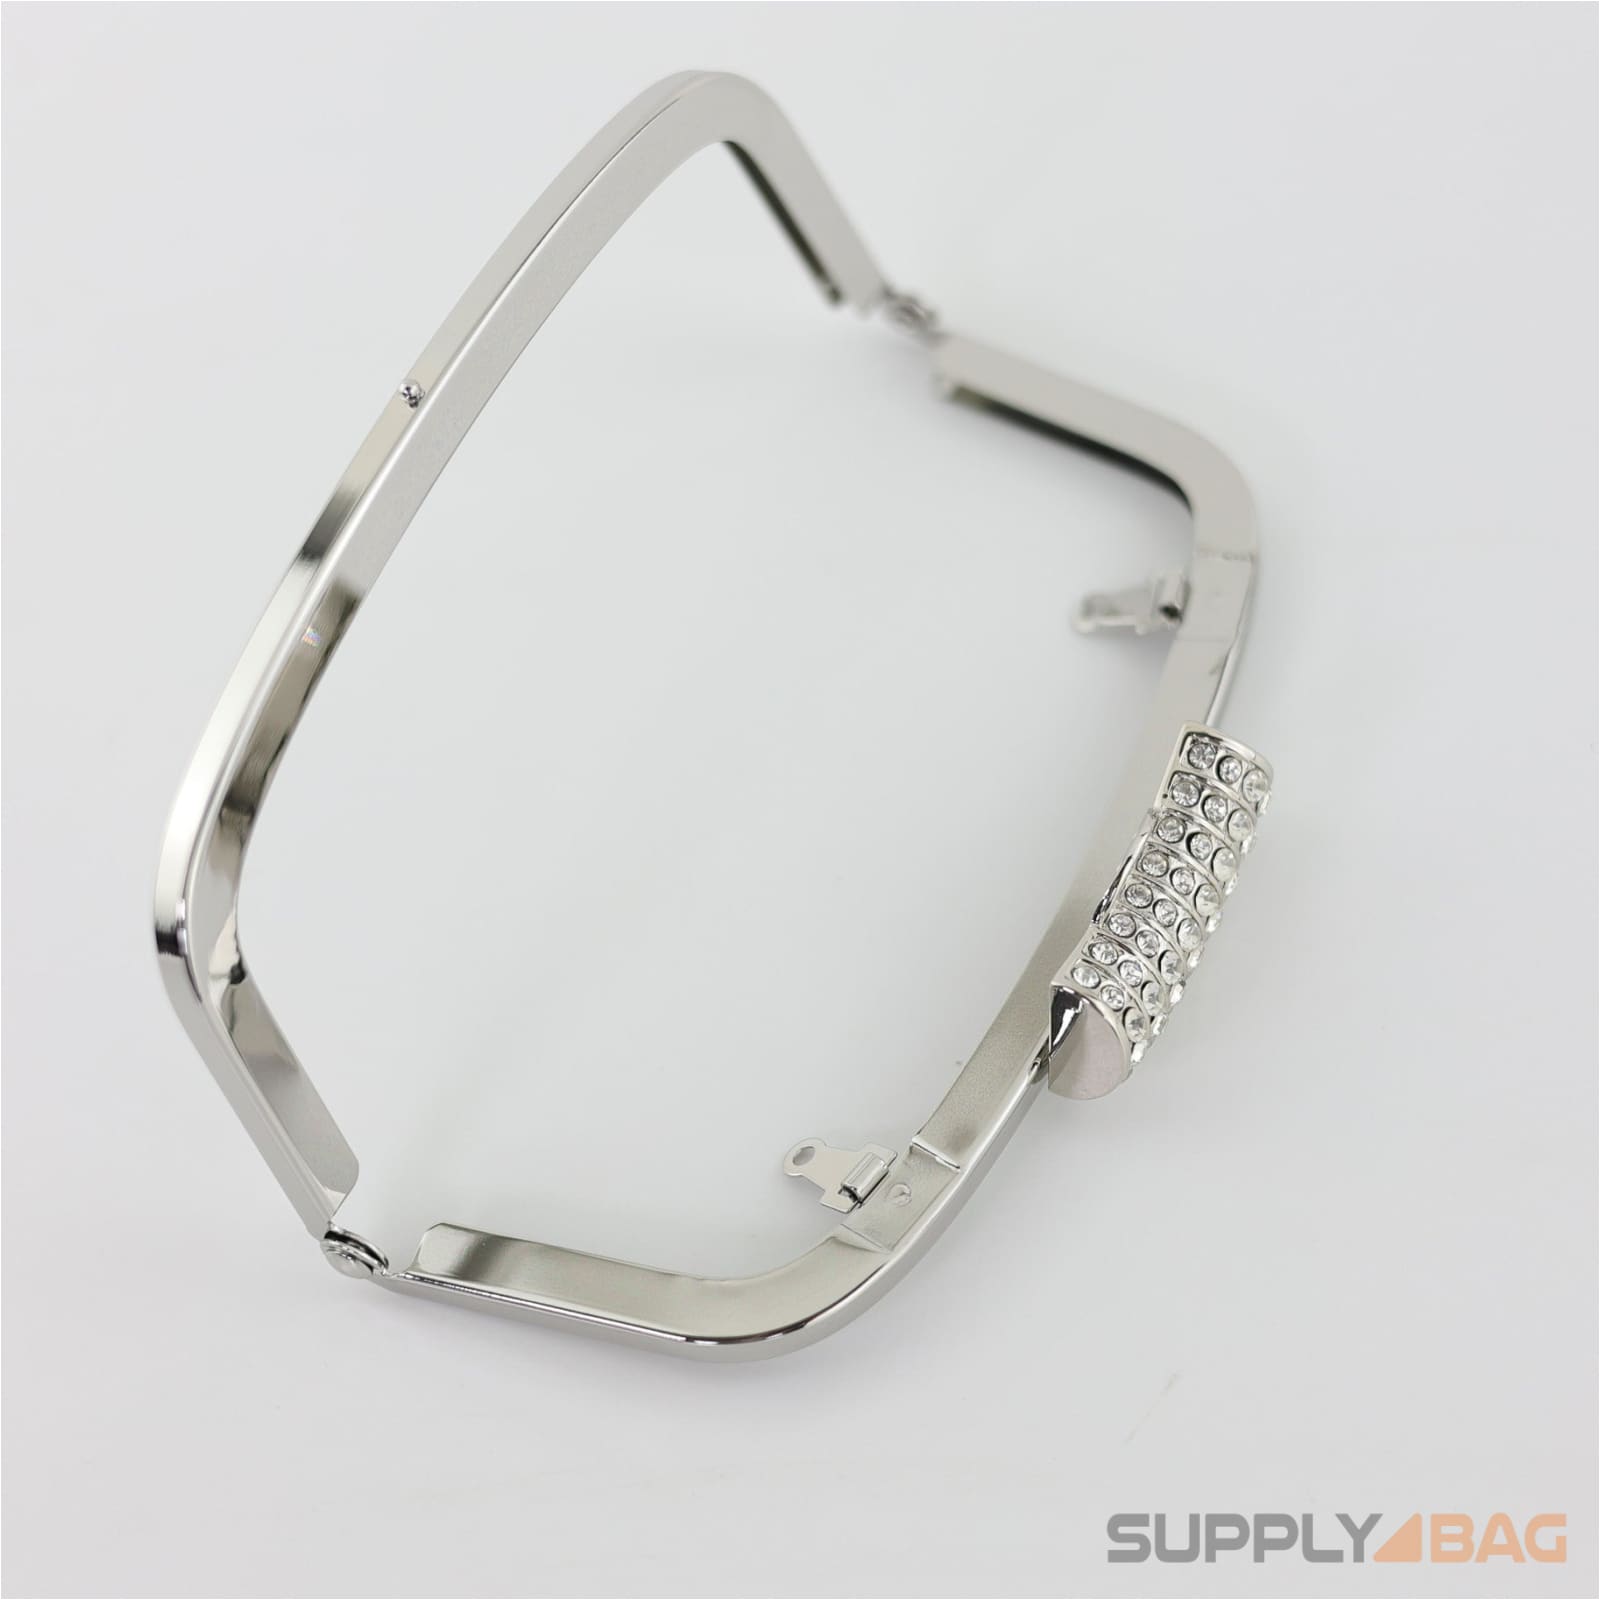 6 x 2 3/4 inch - rhinestone closure silver metal purse frame